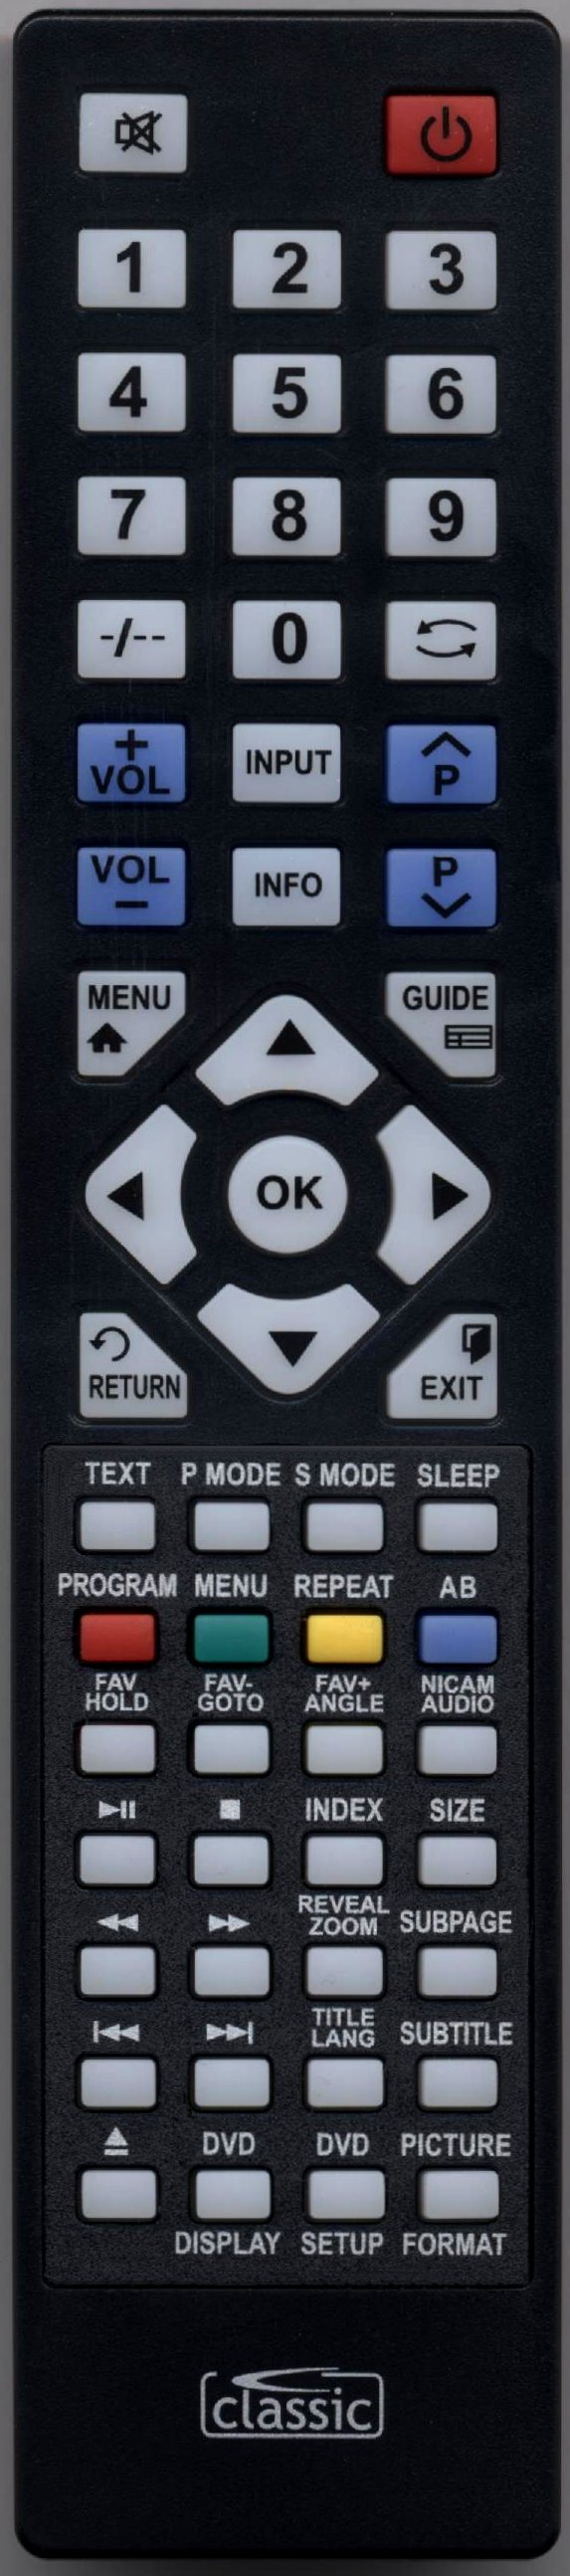 UMC - X216/84 (Inc DVD) Alternative Remote Control